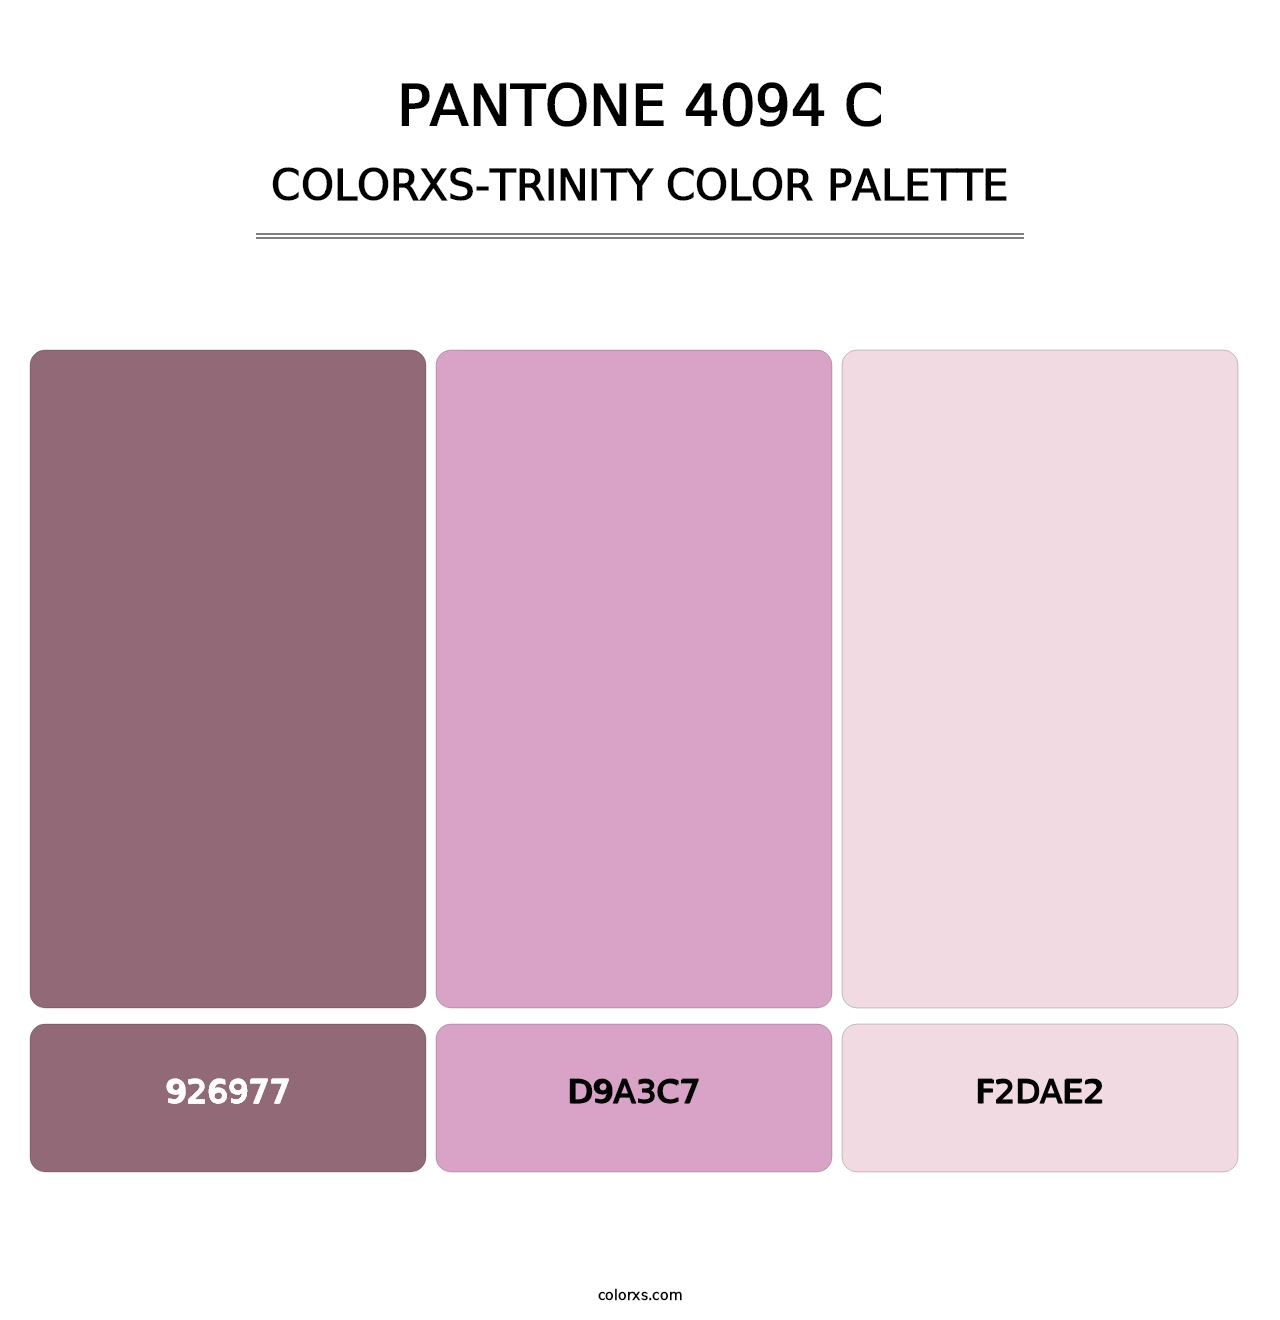 PANTONE 4094 C - Colorxs Trinity Palette